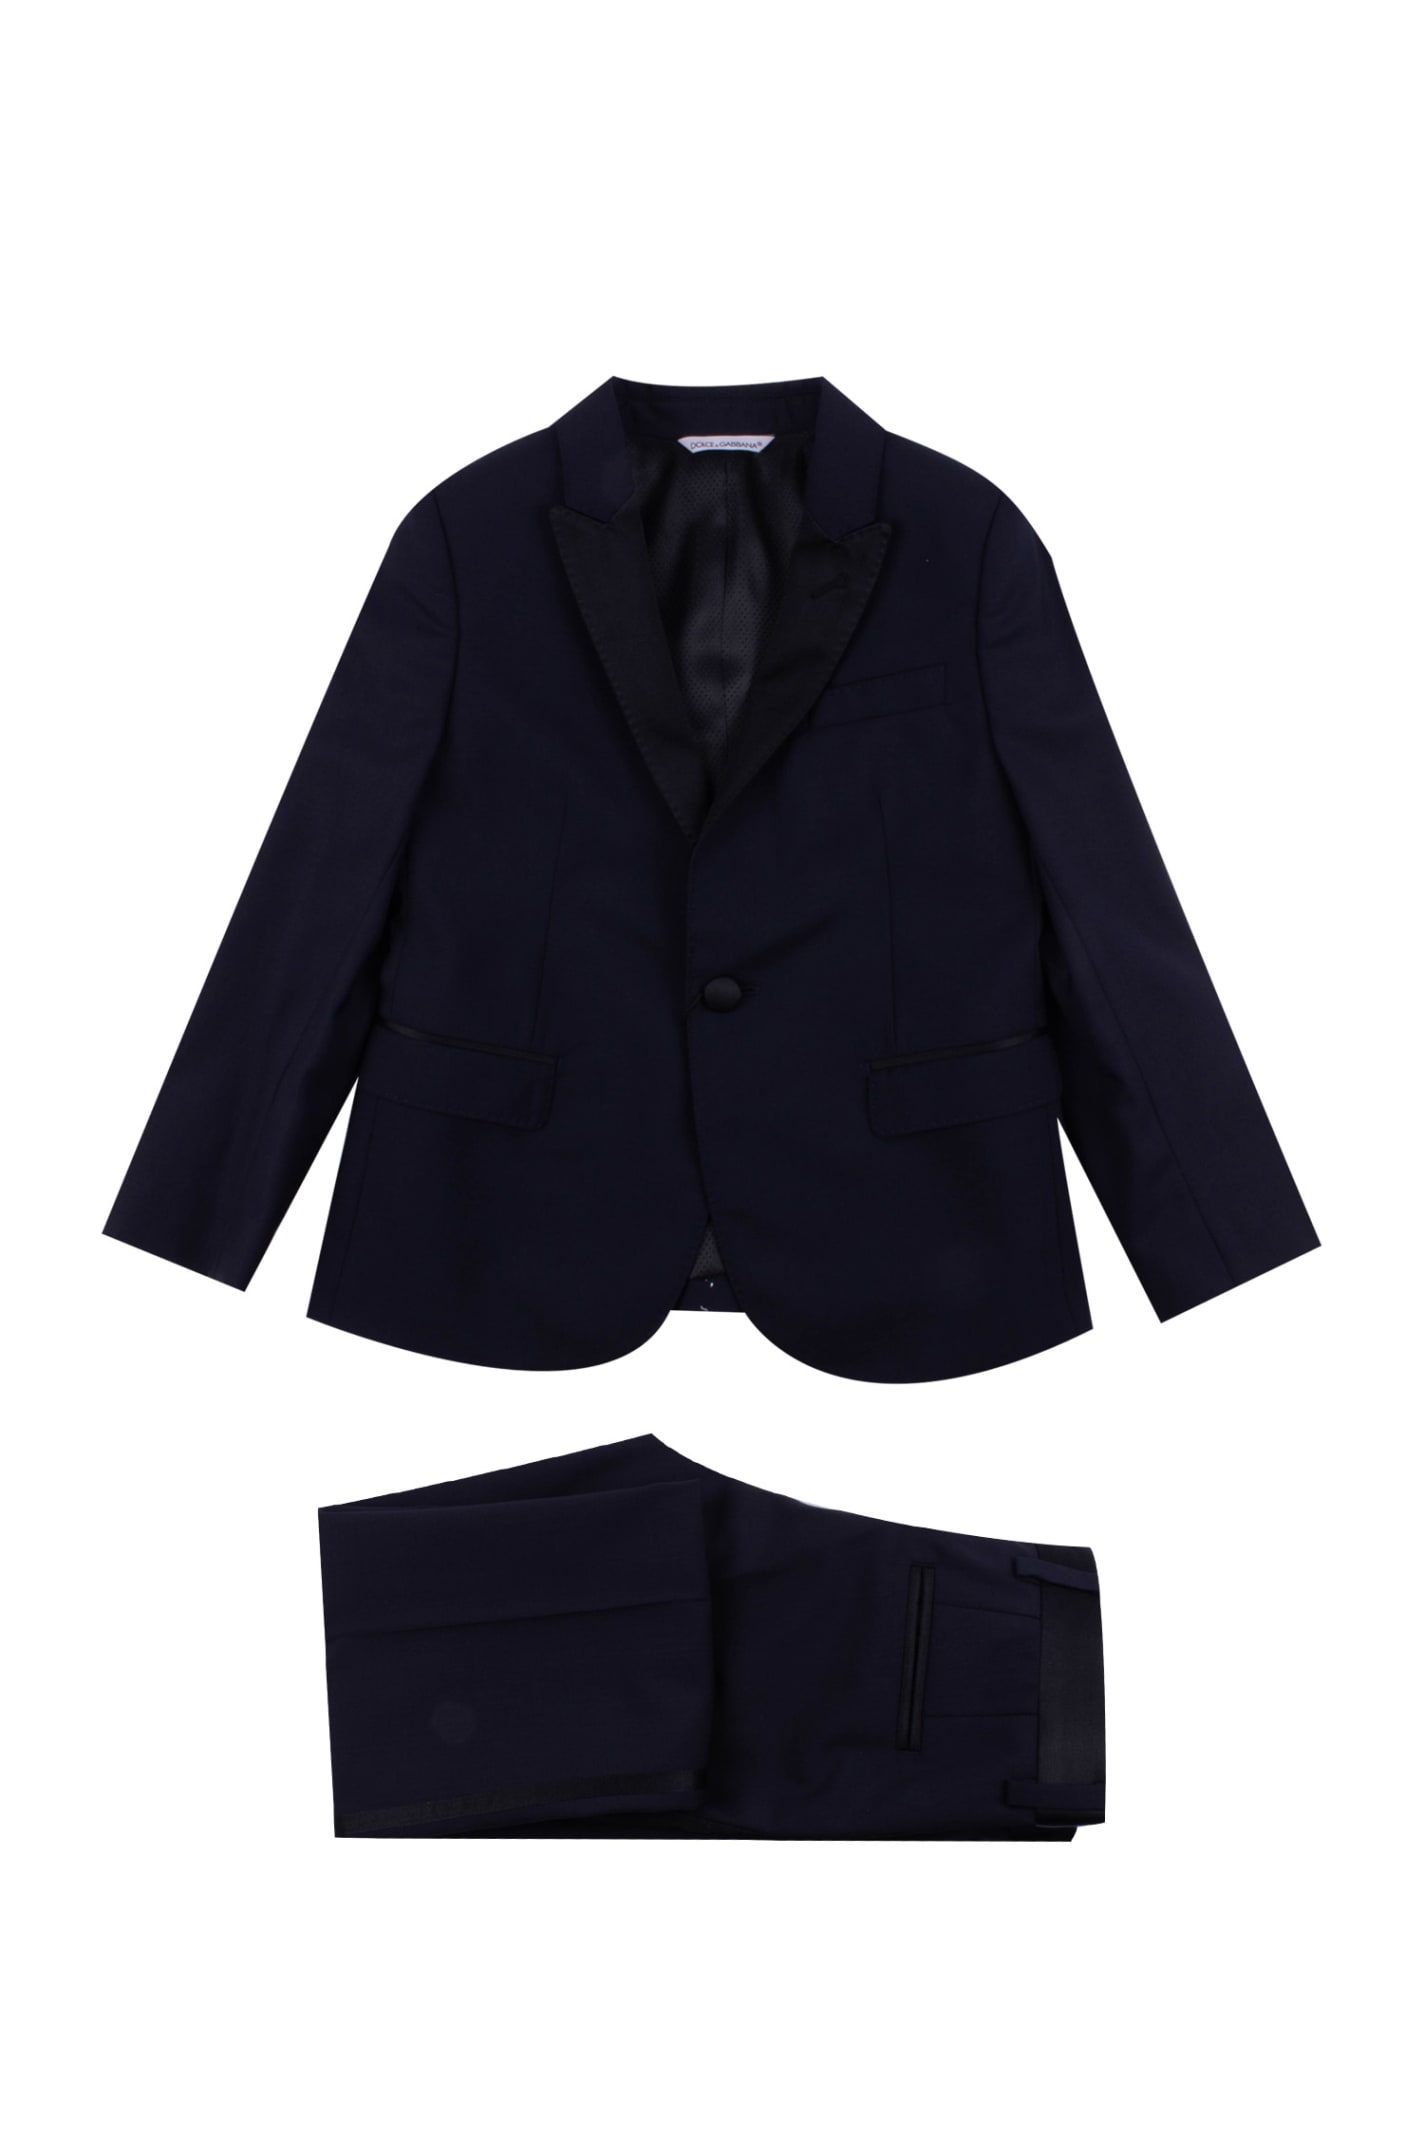 Dolce & Gabbana Wool Blend Jacket And Pants